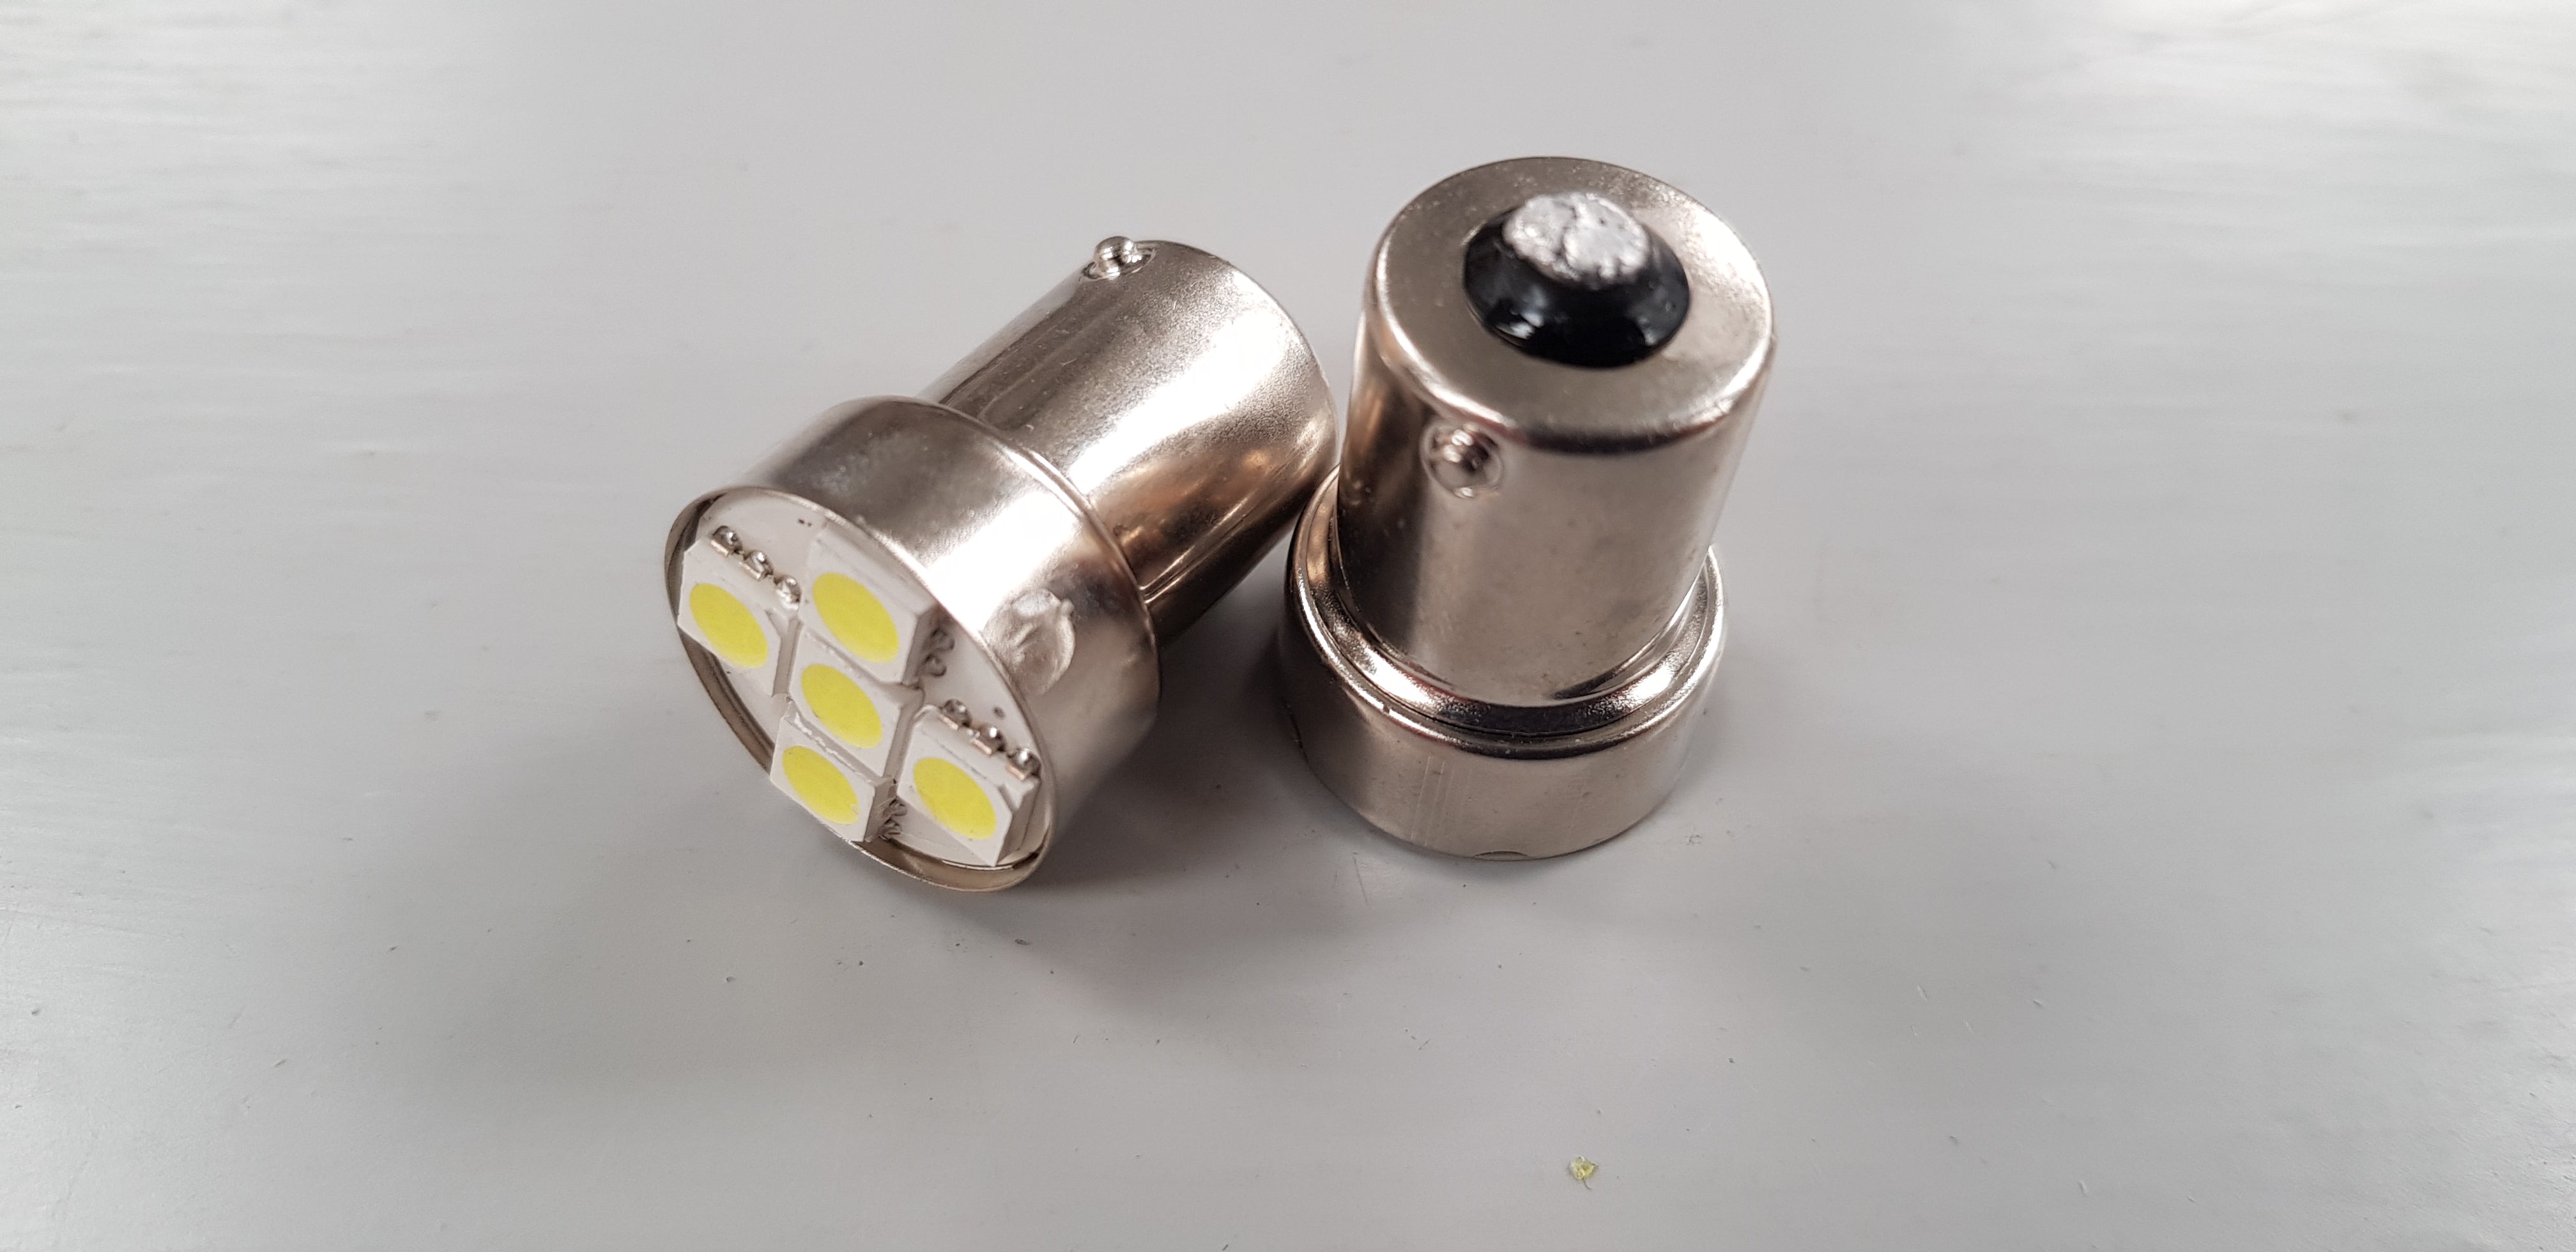 LED-Einzelkontakt-Rücklichtbirnen ersetzen 149 Blinker/Blinker, 2 Stück – 24 V LED-Glühbirnen – LED-Glühbirnen – spo-cs-dis